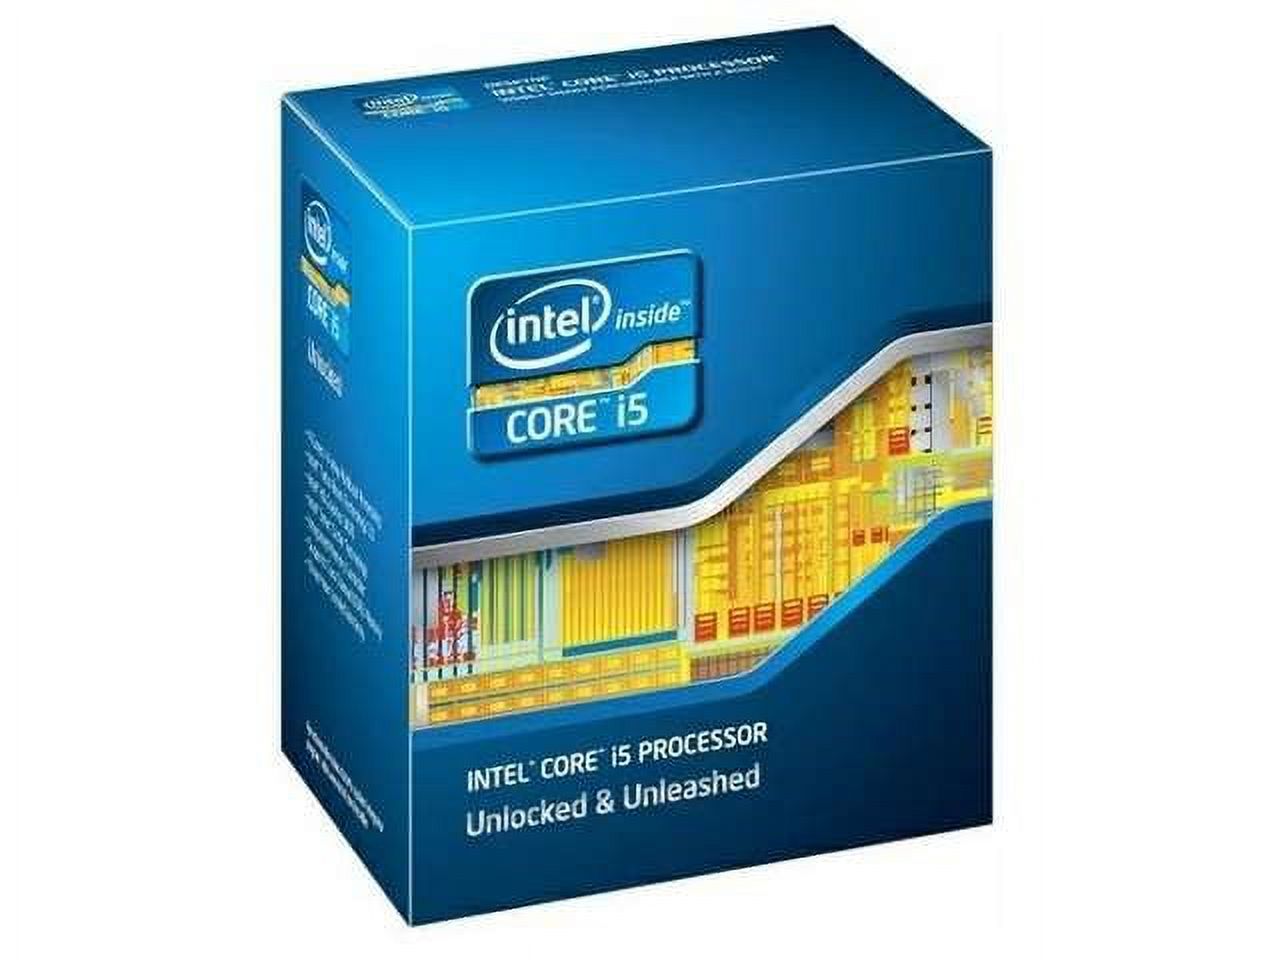 Intel Core i5-4590 Haswell Quad-Core 3.3 GHz LGA 1150 84W BX80646I54590 Desktop Processor Intel HD Graphics 4600 - image 2 of 2